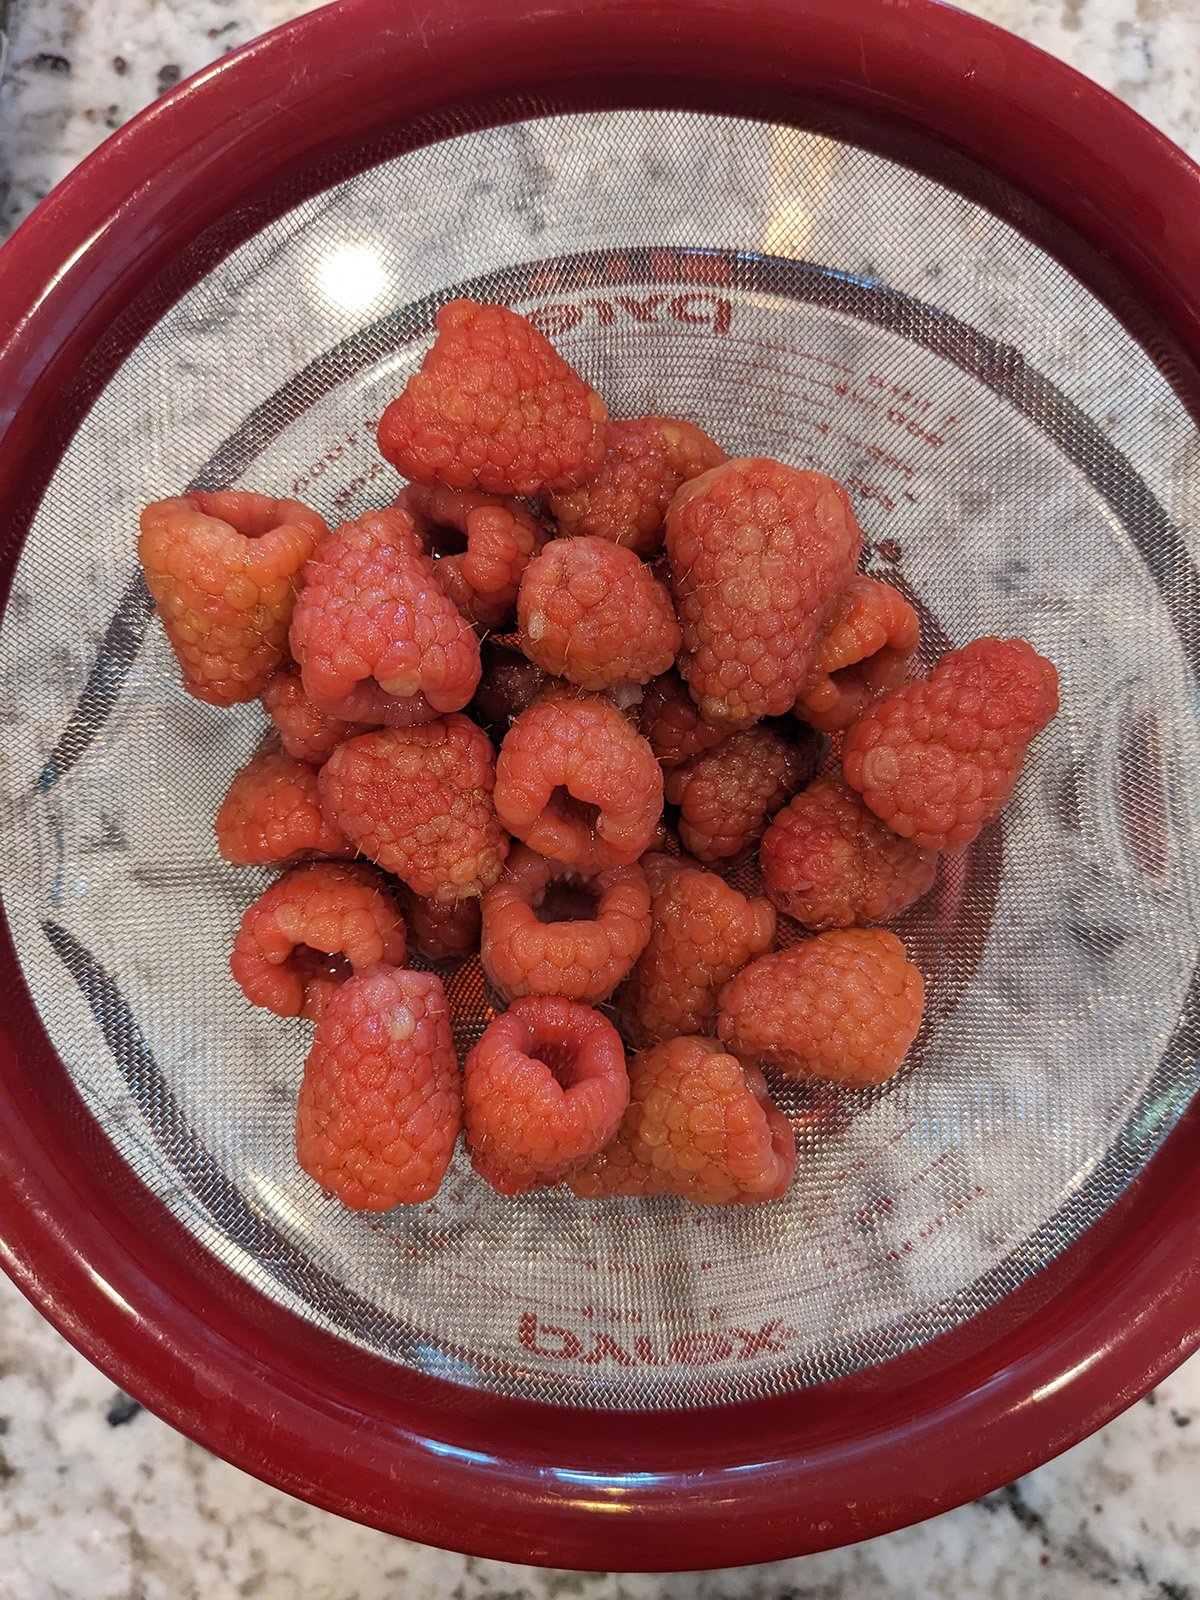 raspberries in a fine mesh strainer.